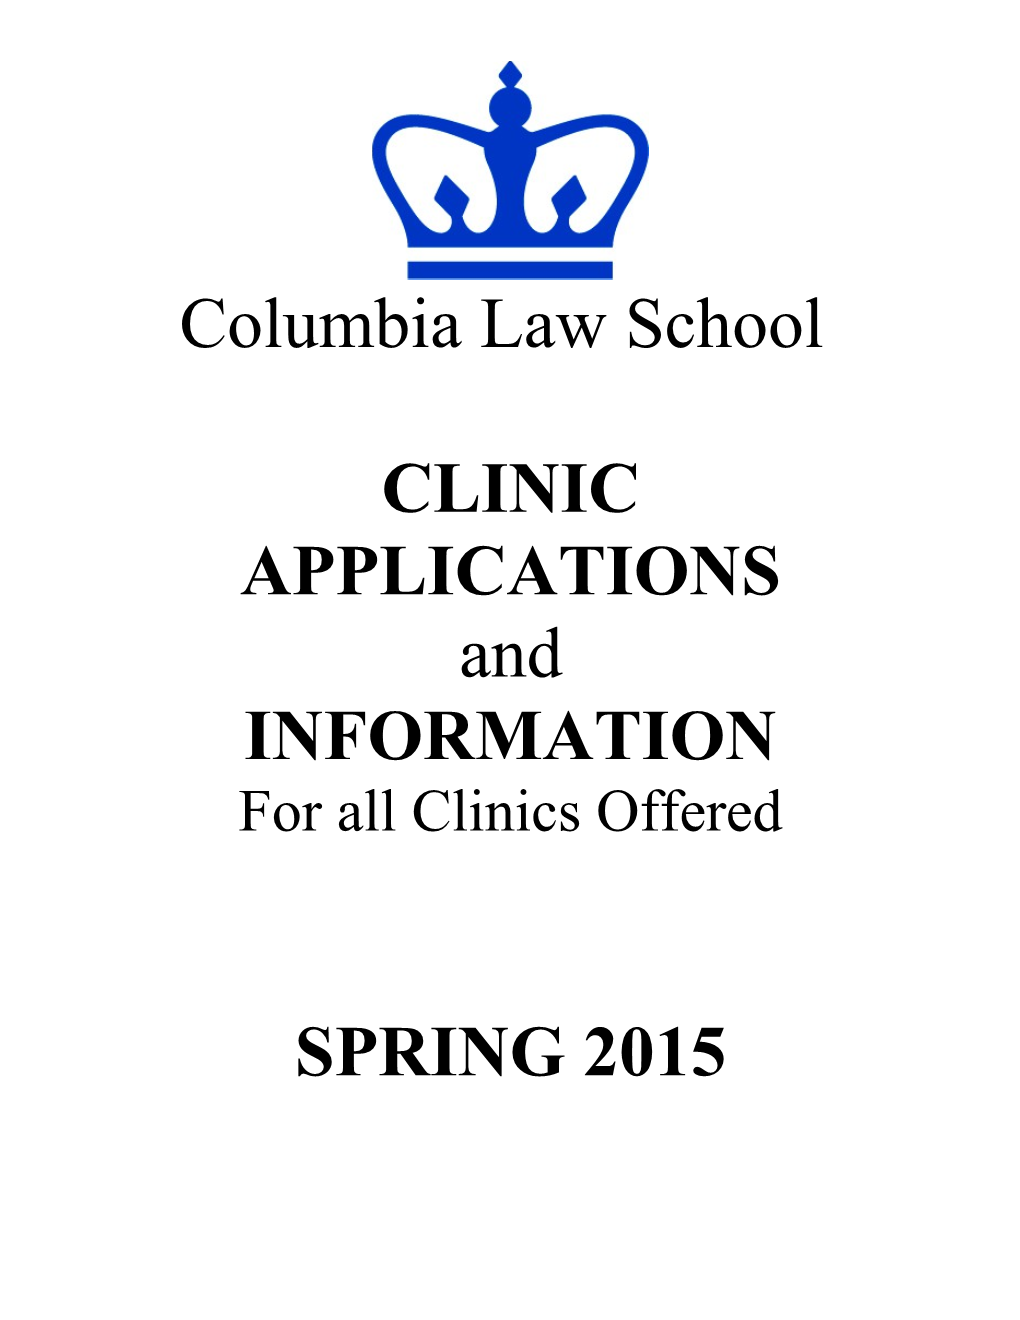 Clinics at Columbia Law School